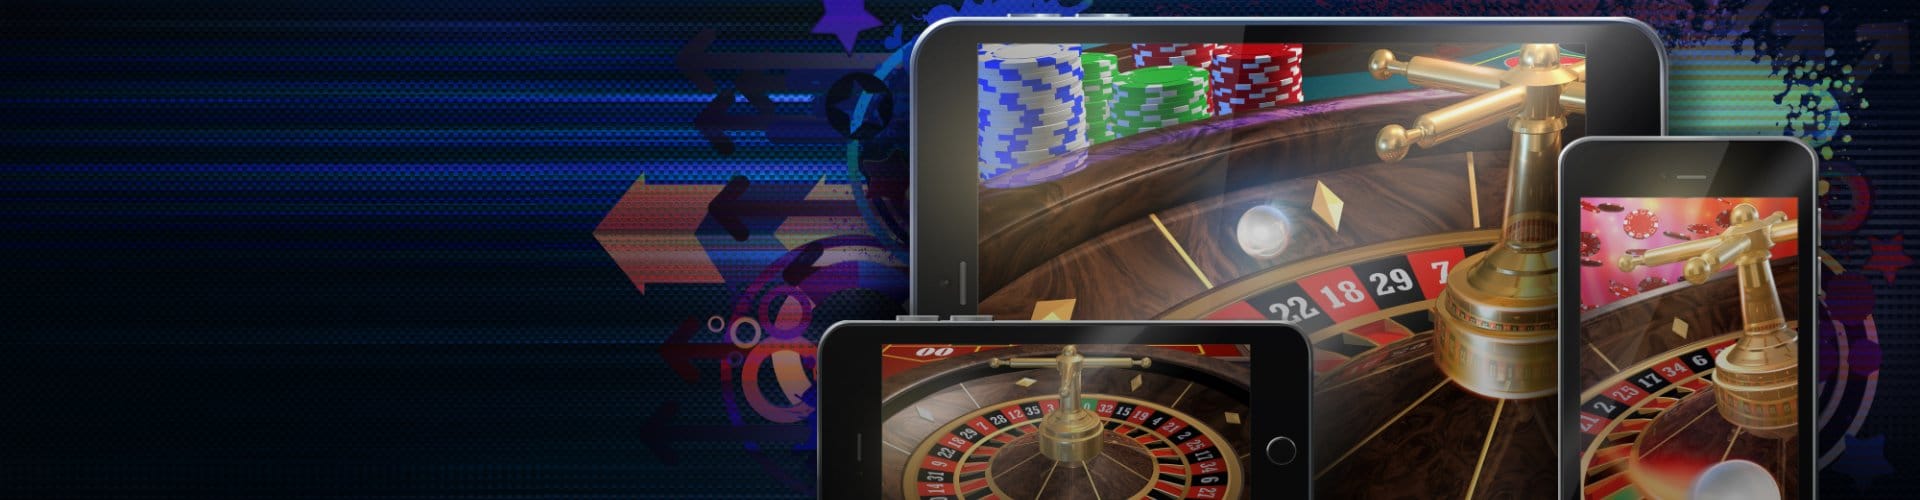 BBIN Casino Software Review – Top casino games to play